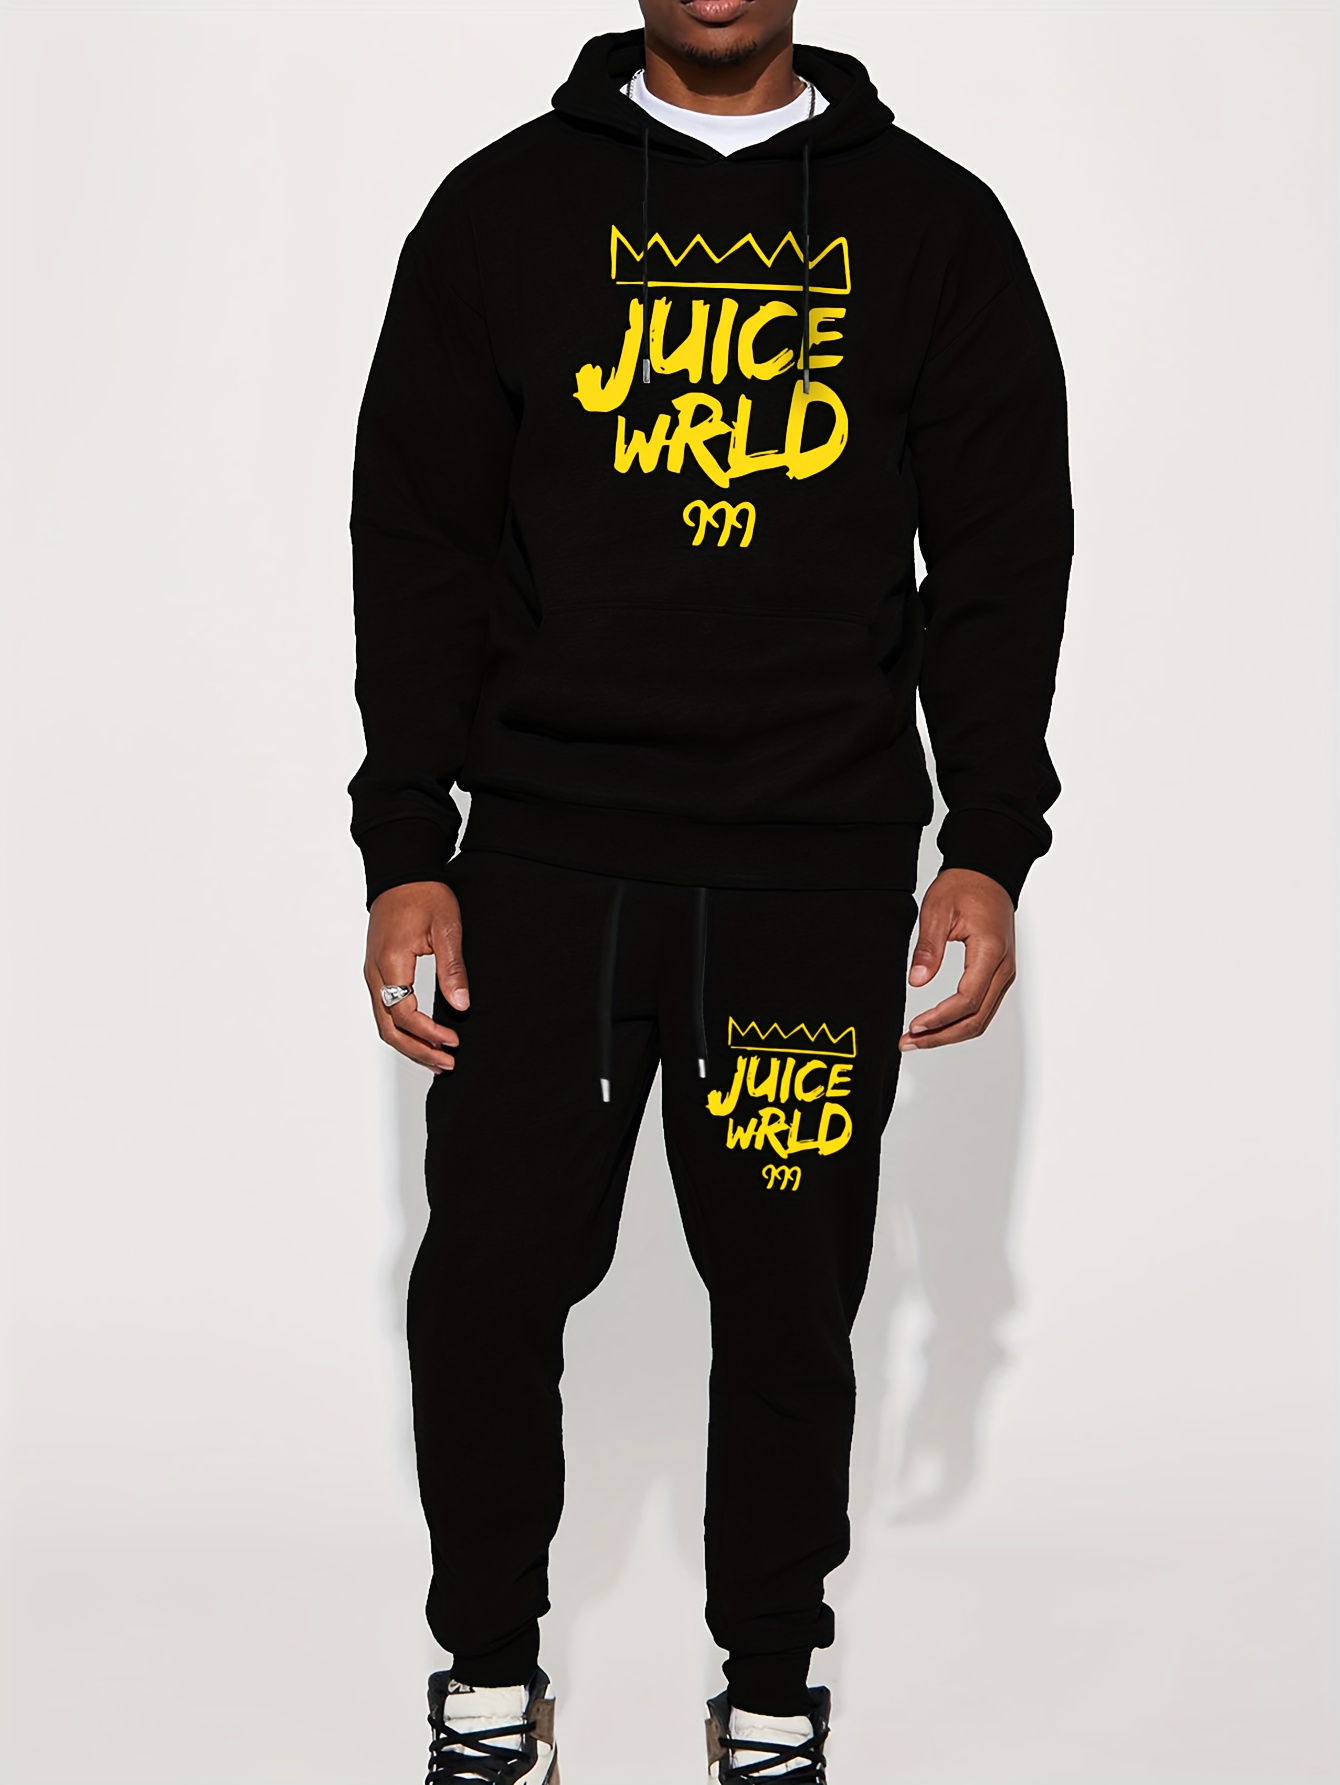 Juice Wrld Fashion Style Cartoon Fashion and Cool Clothes Good Quality  Printing Women/men Hoodies and Sweatshirts